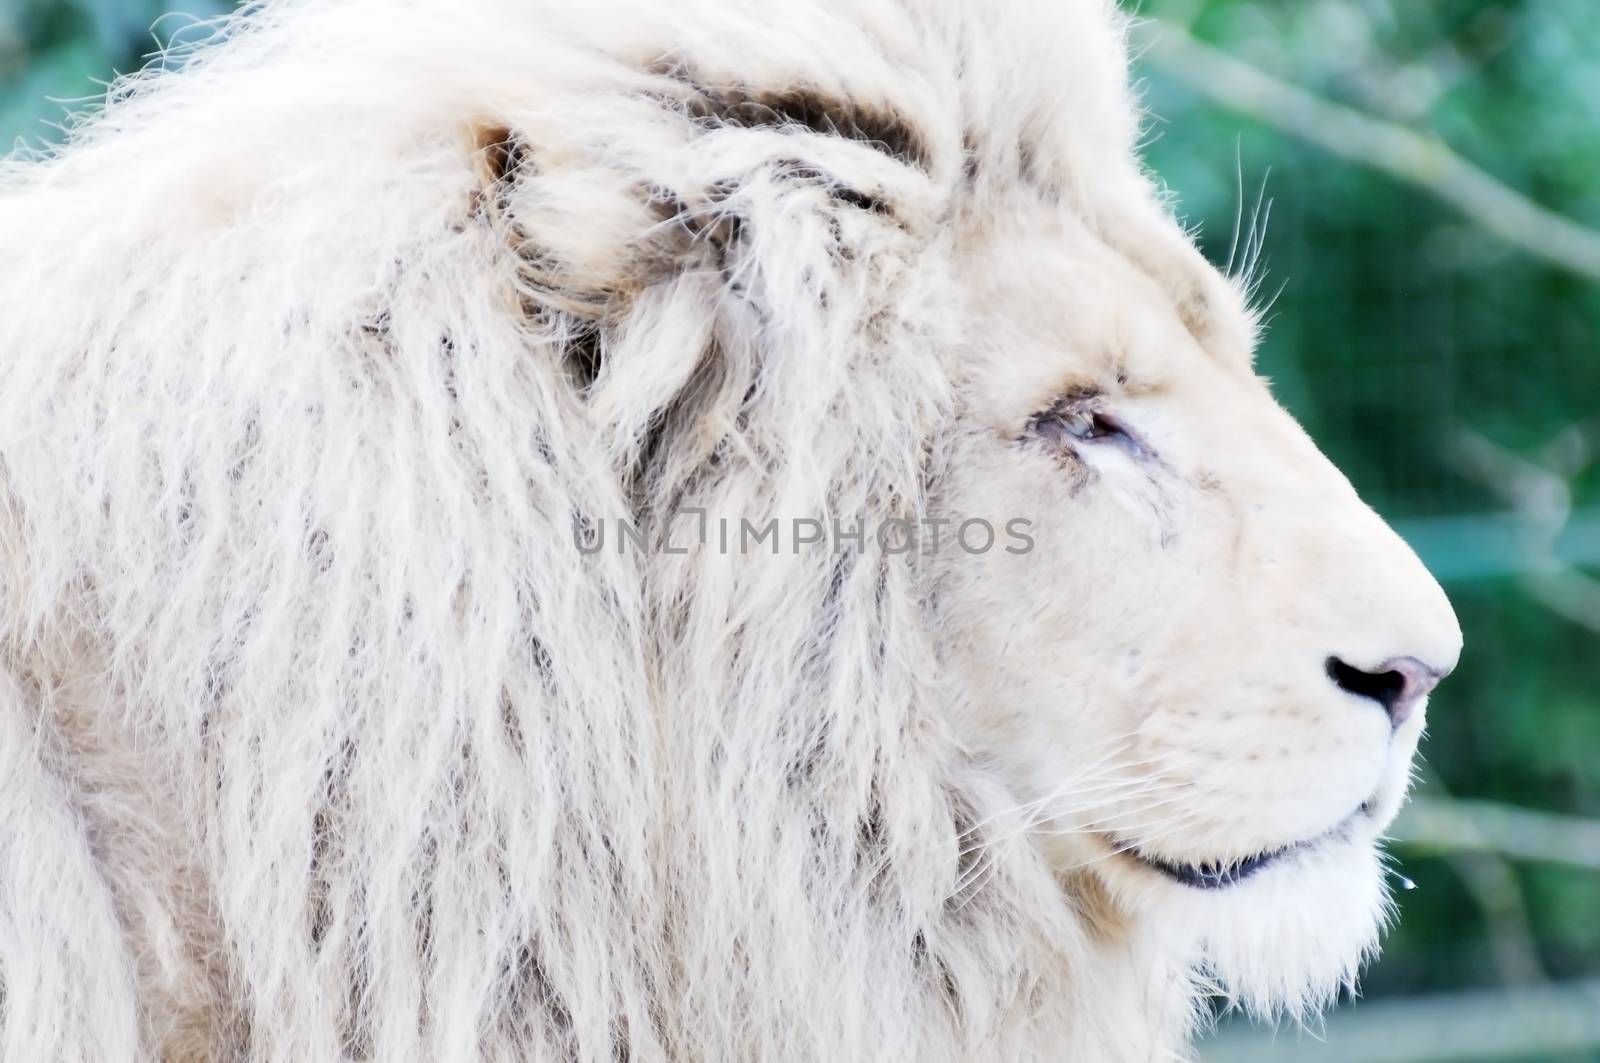 White lion closeup showing fur detail and face